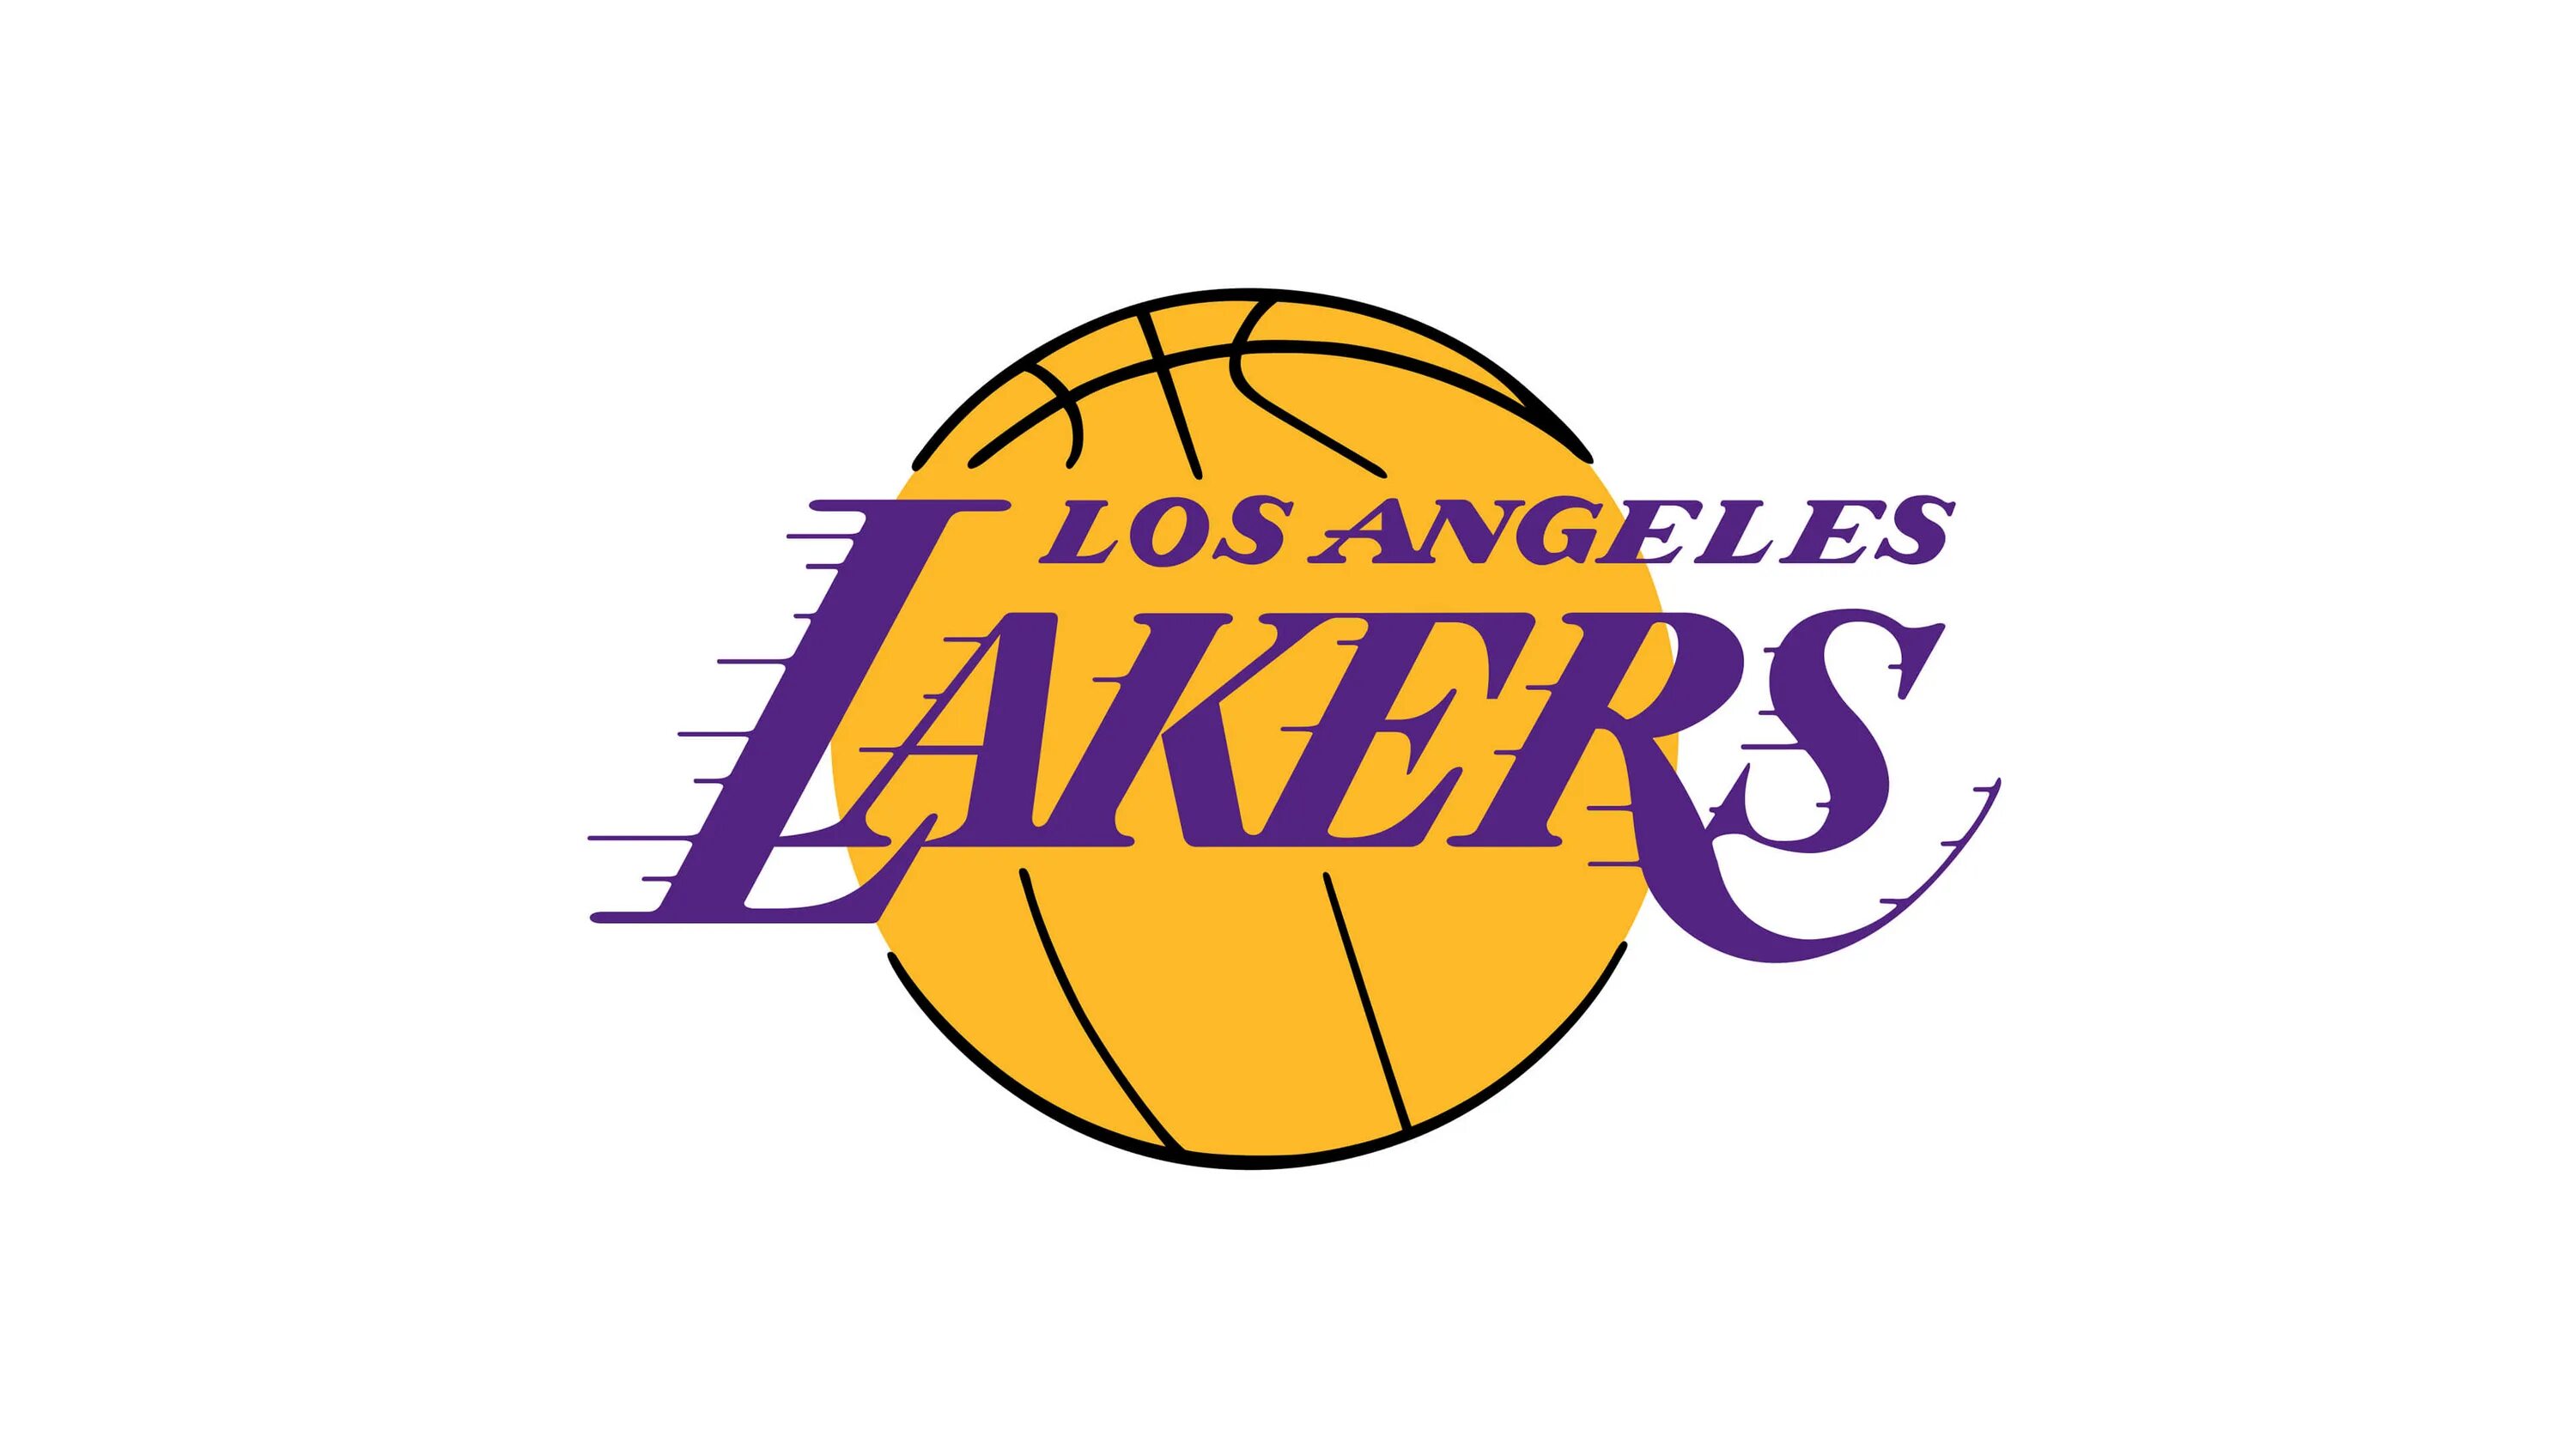 La lakers. Баскетбольный клуб Лос-Анджелес Лейкерс. Лос Анджелес Лейкерс эмблема. Лого Лос Анджелес Лейкерс svg. Обои Lakers на айфон.